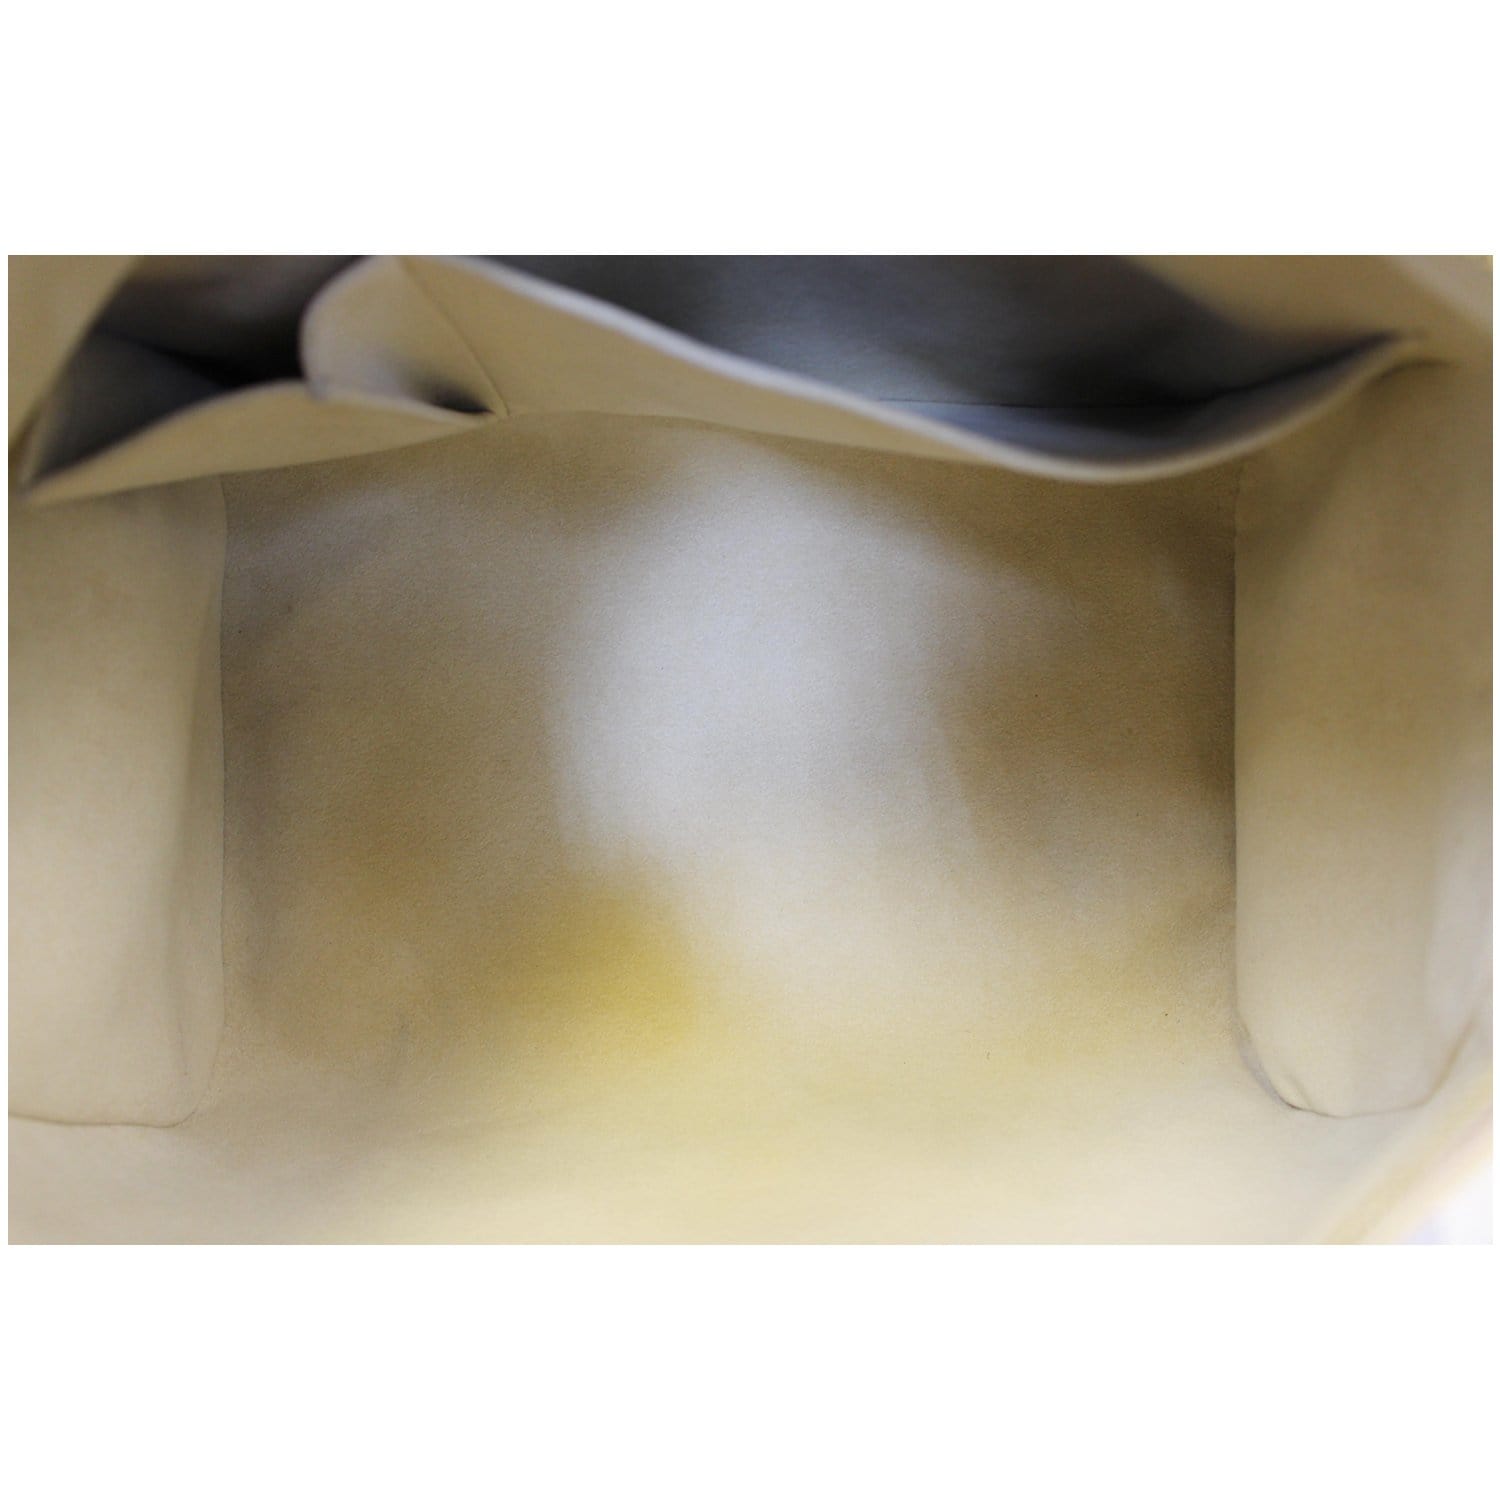 White Louis Vuitton Damier Azur Berkeley Handbag – Designer Revival